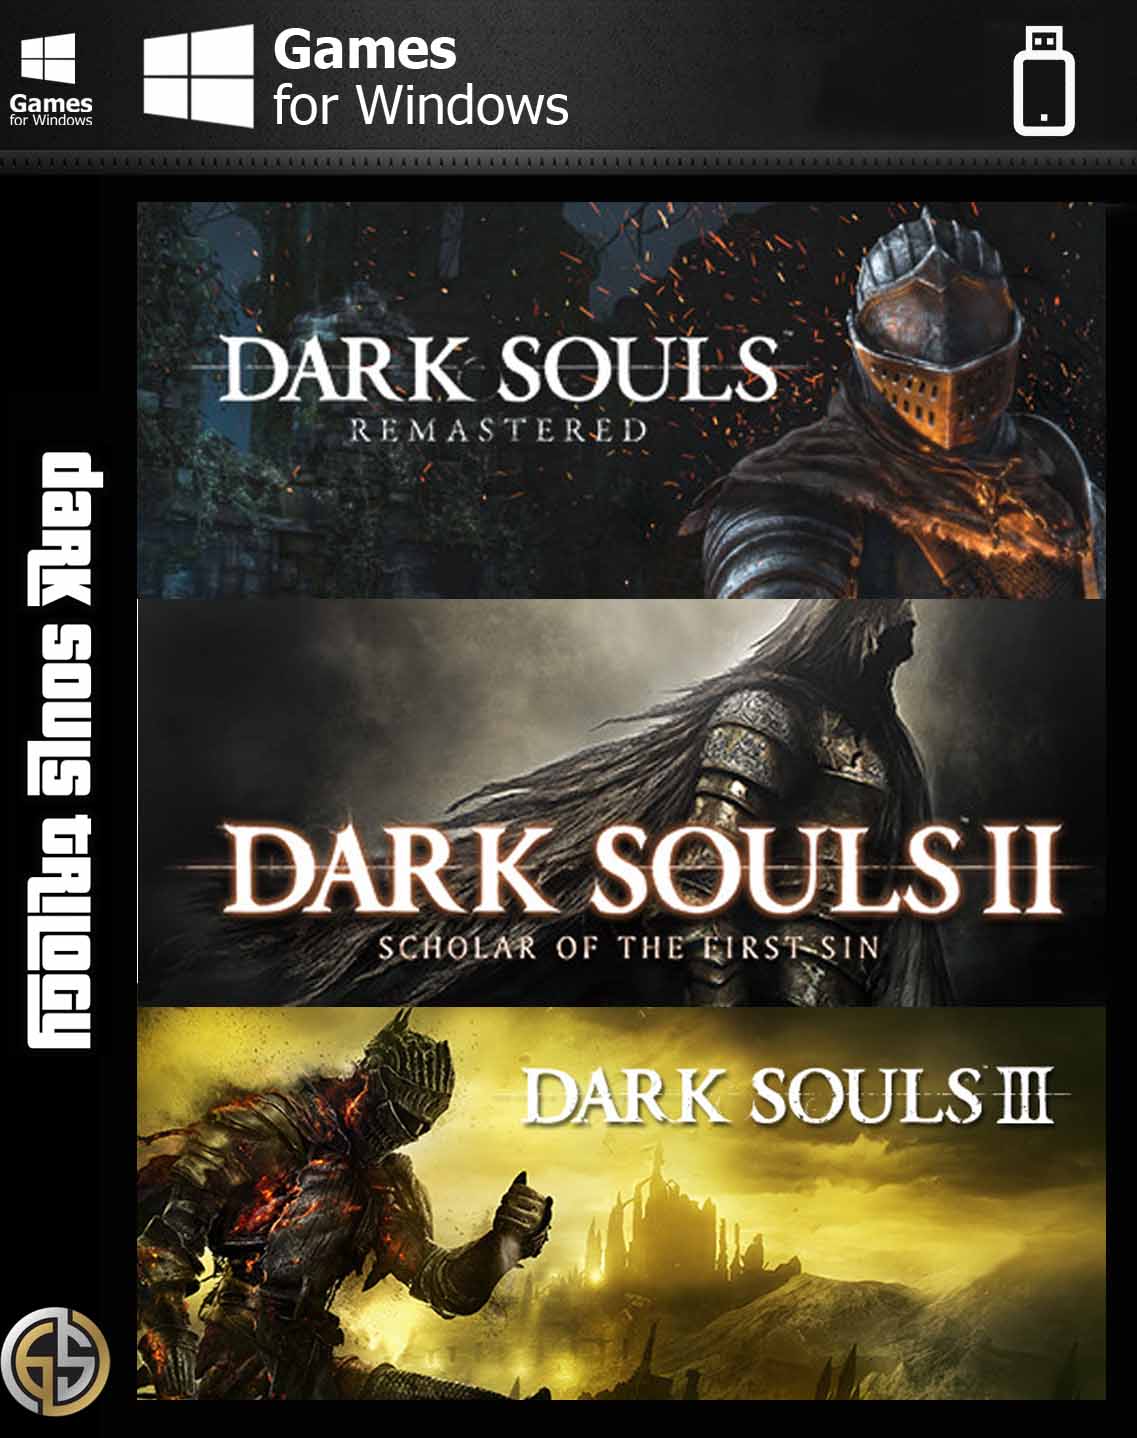 Dark Souls Trilogy Announced